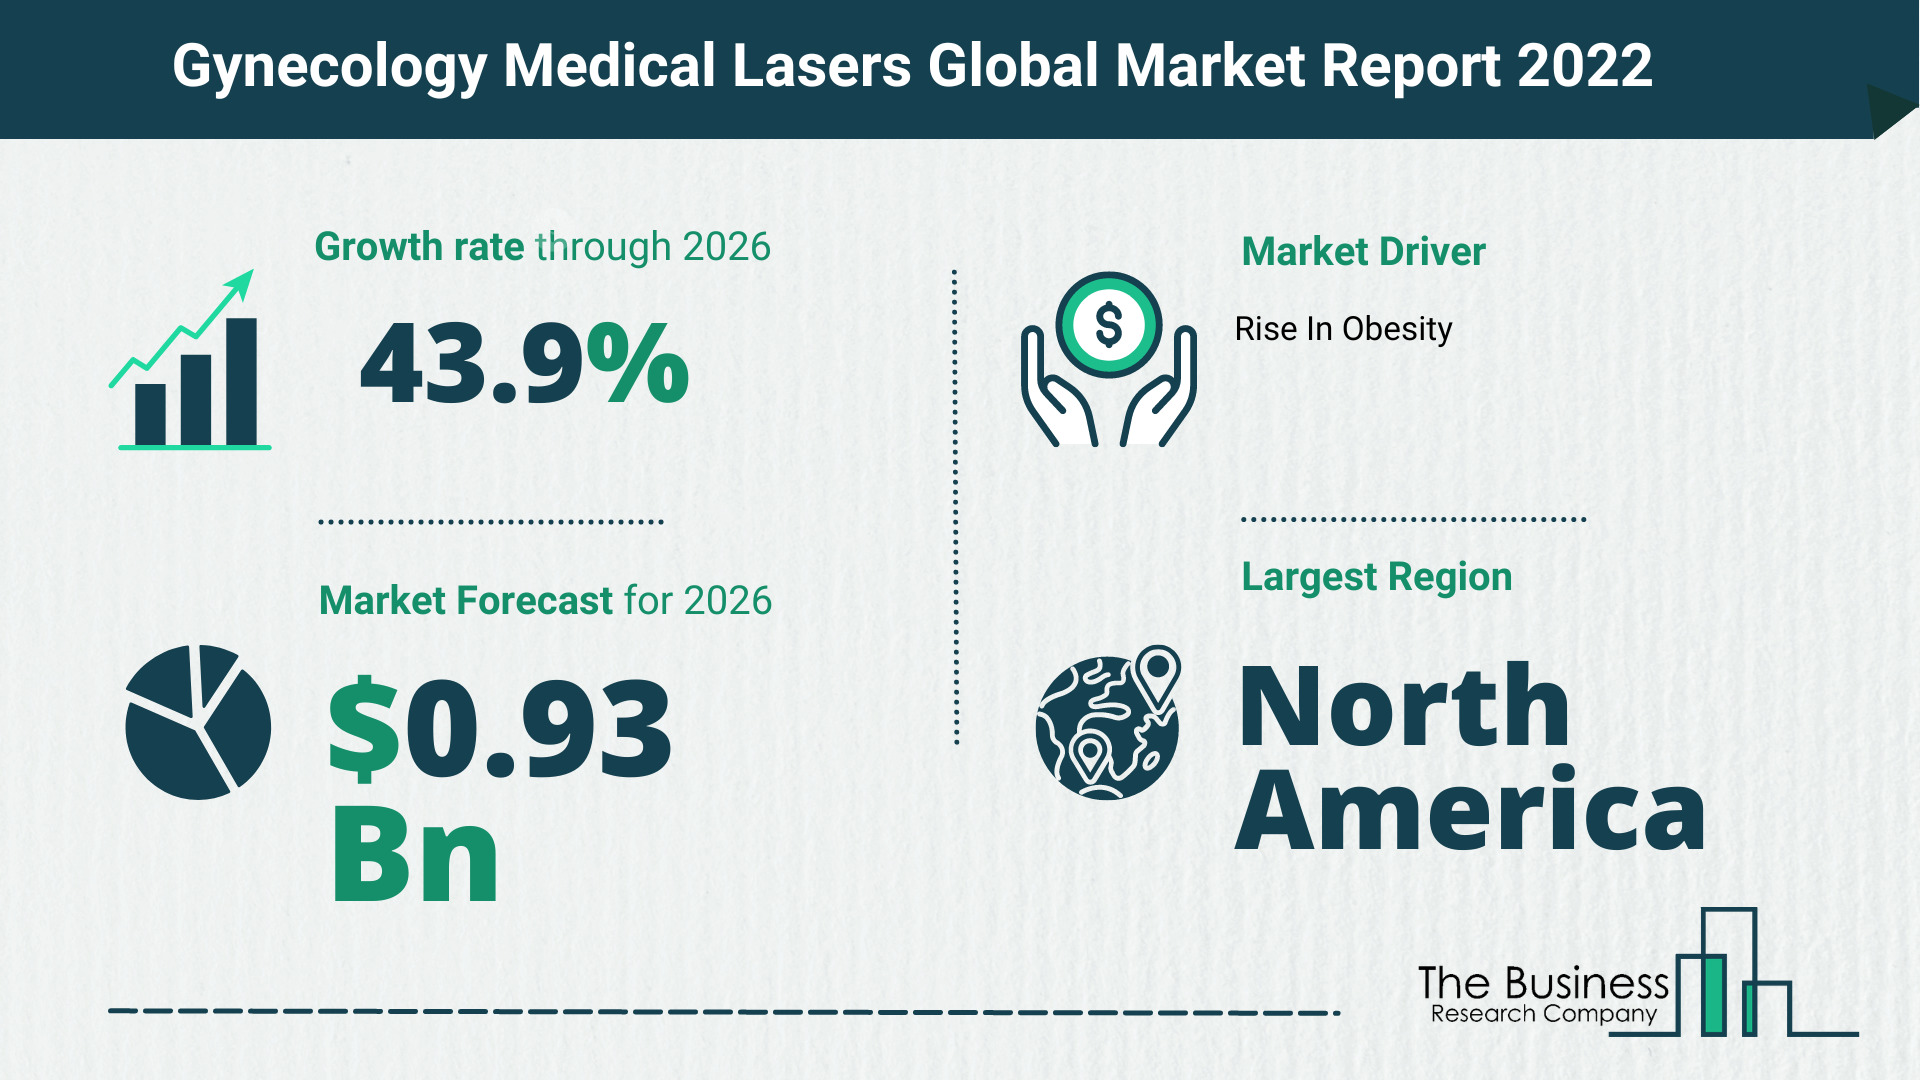 Global Gynecology Medical Lasers Market Size